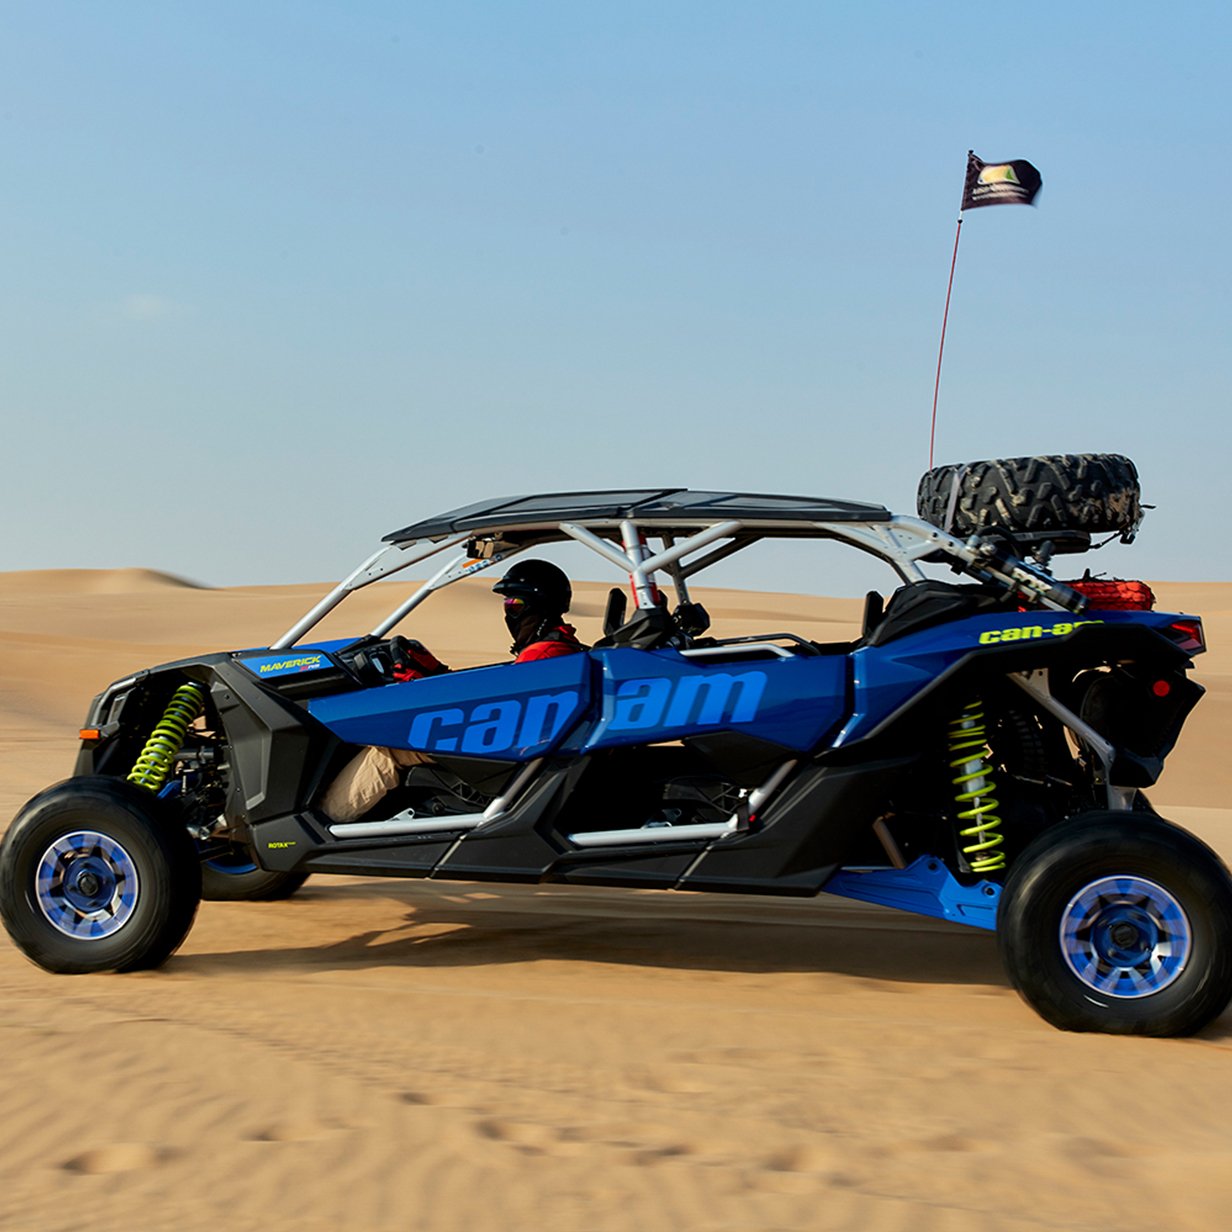 Dune Buggy Adventure in Dubai - Morning Run, , large